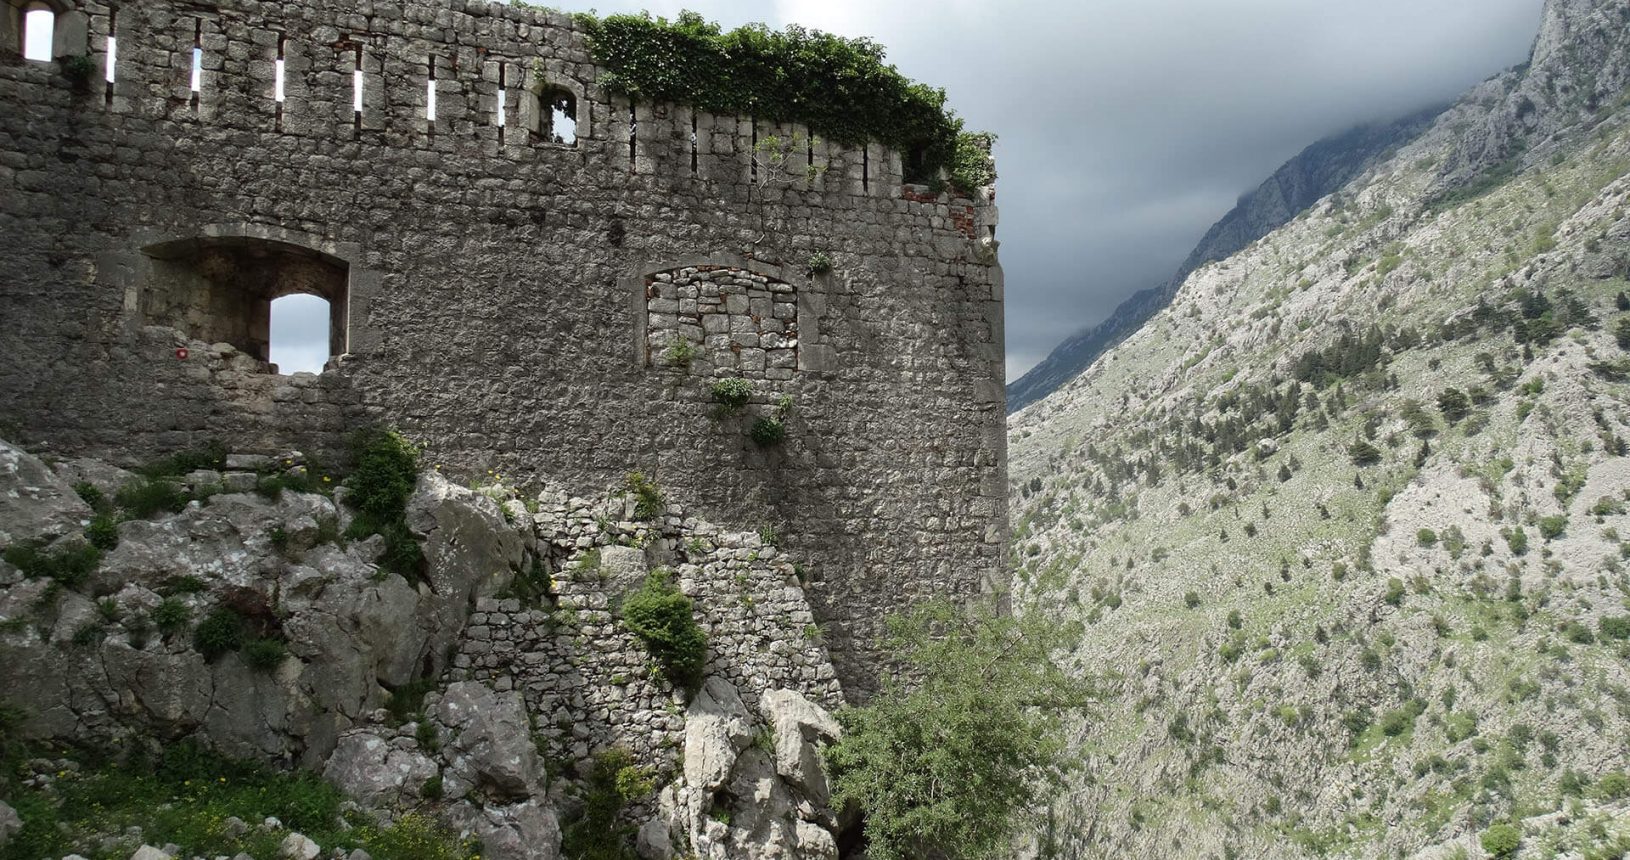 Hidden entrance to Kotor Fortress